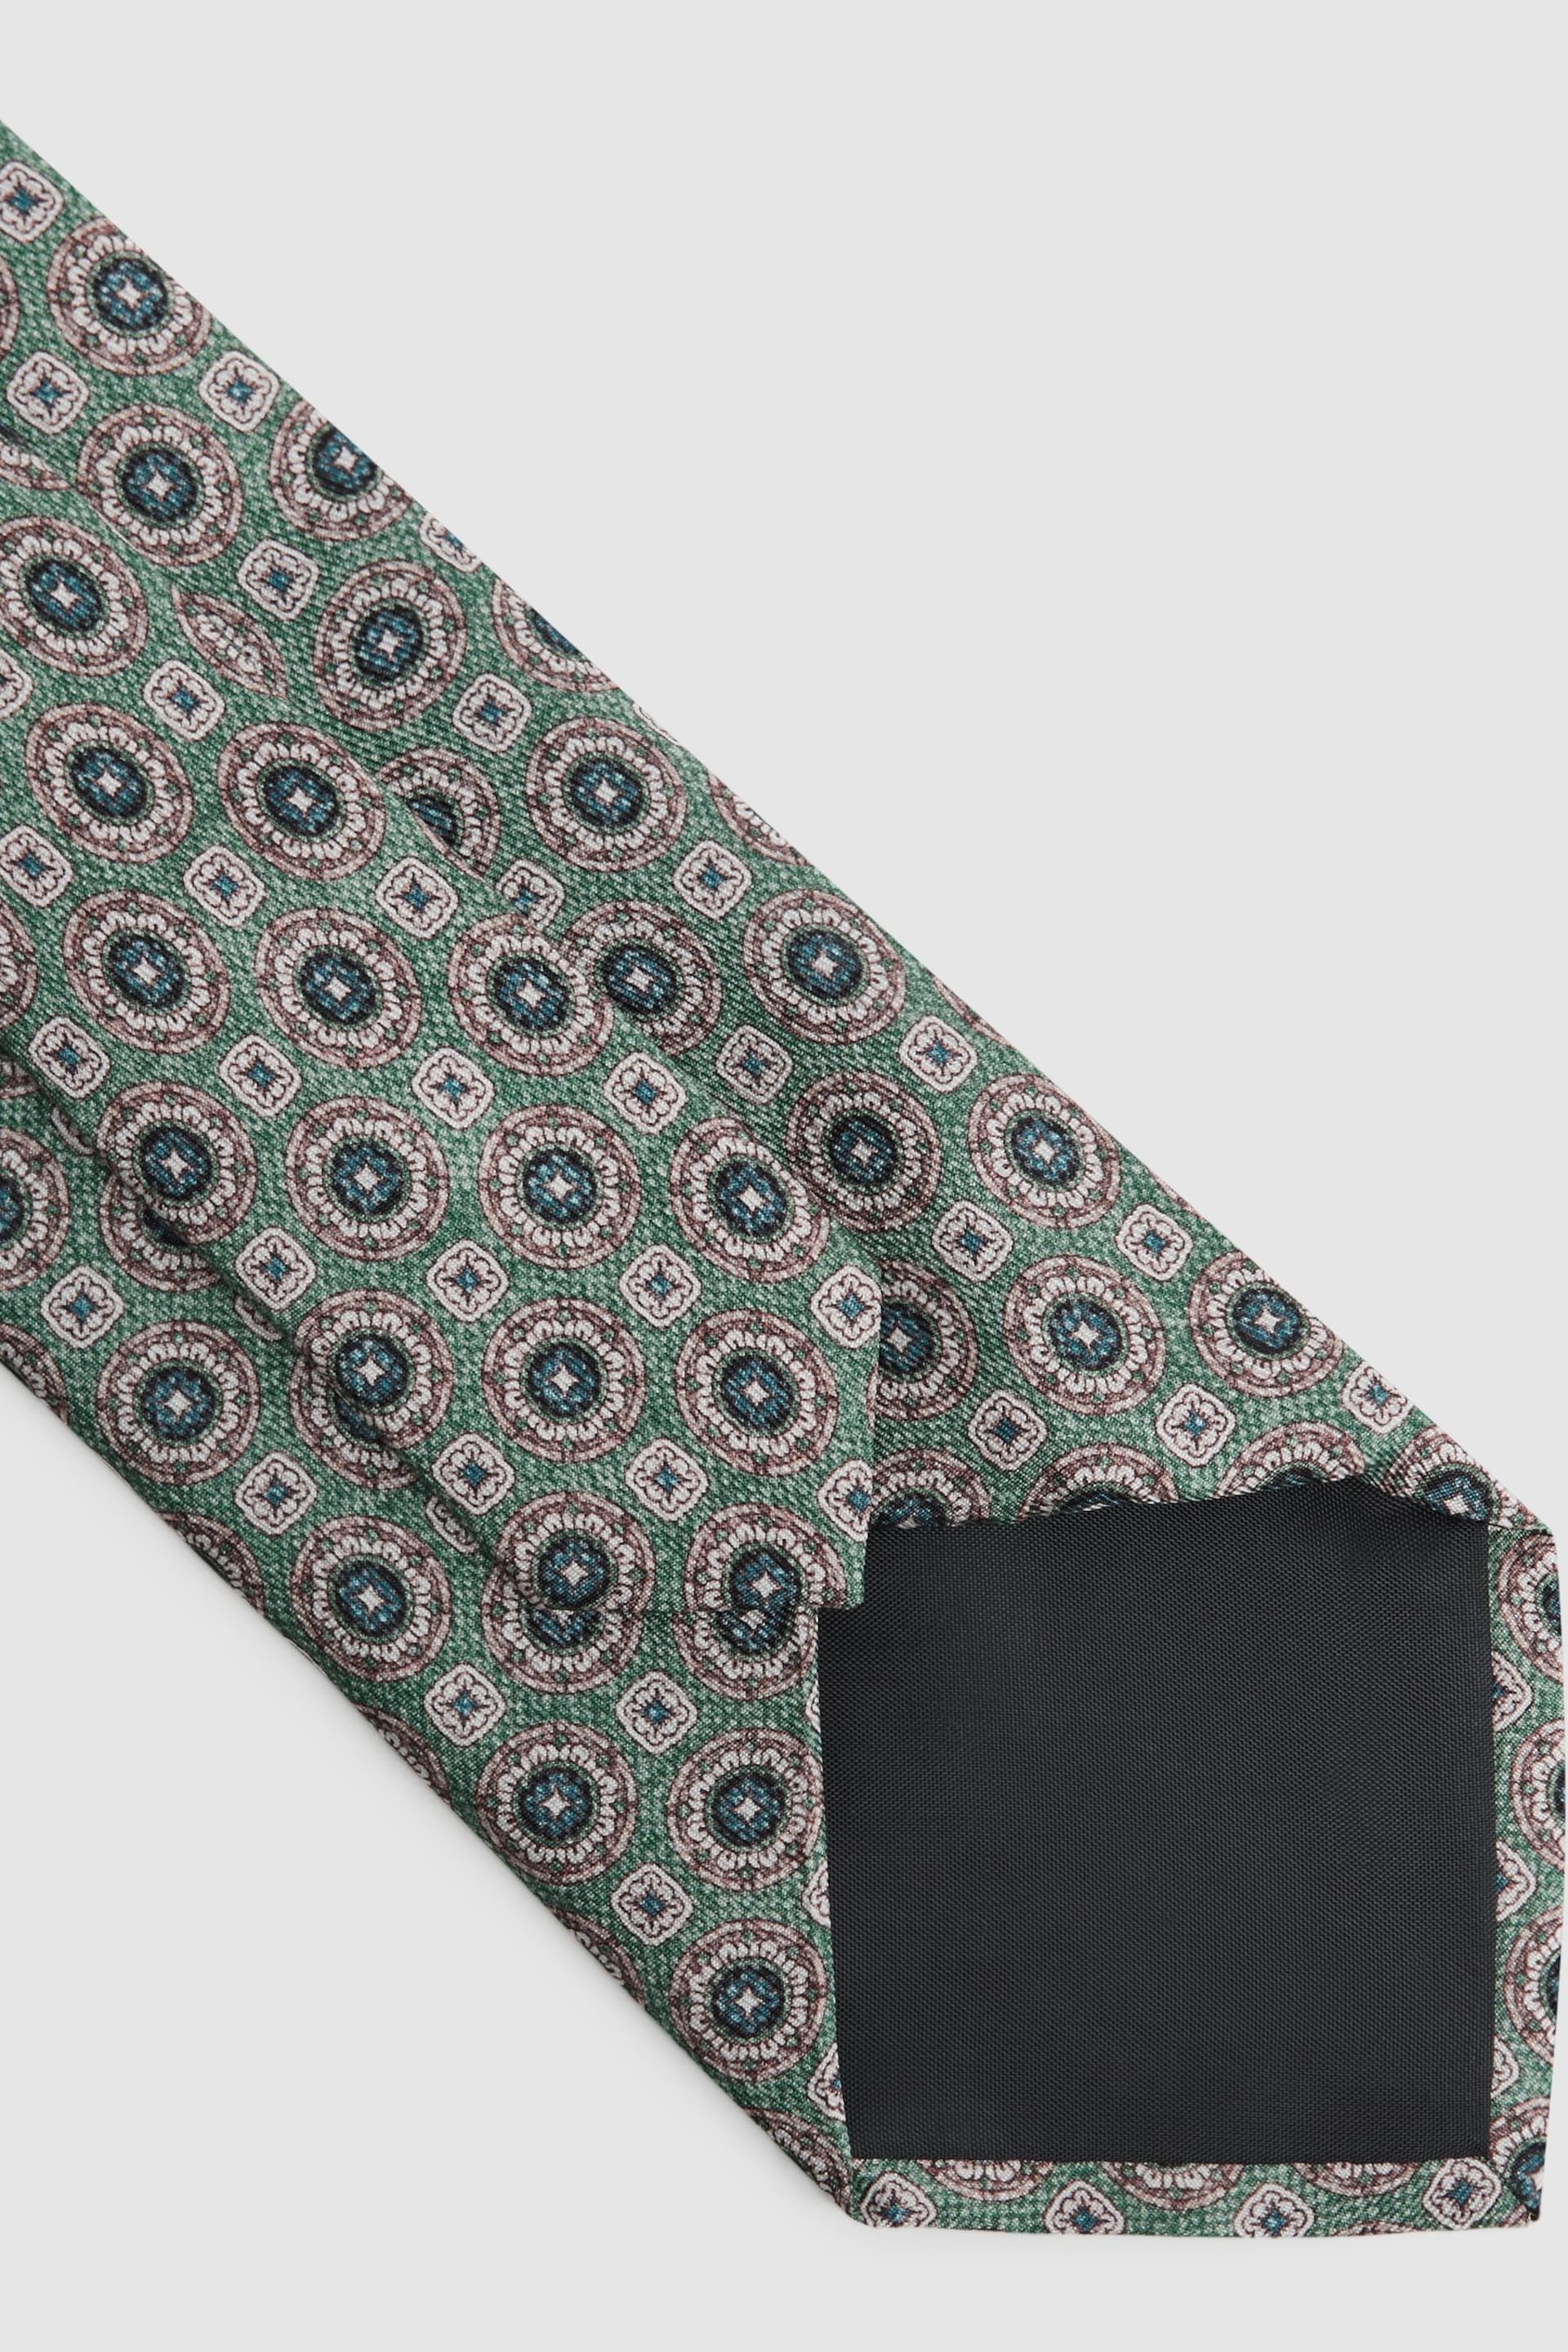 Reiss Sea Green Asolo Silk Medallion Print Tie - Image 4 of 5